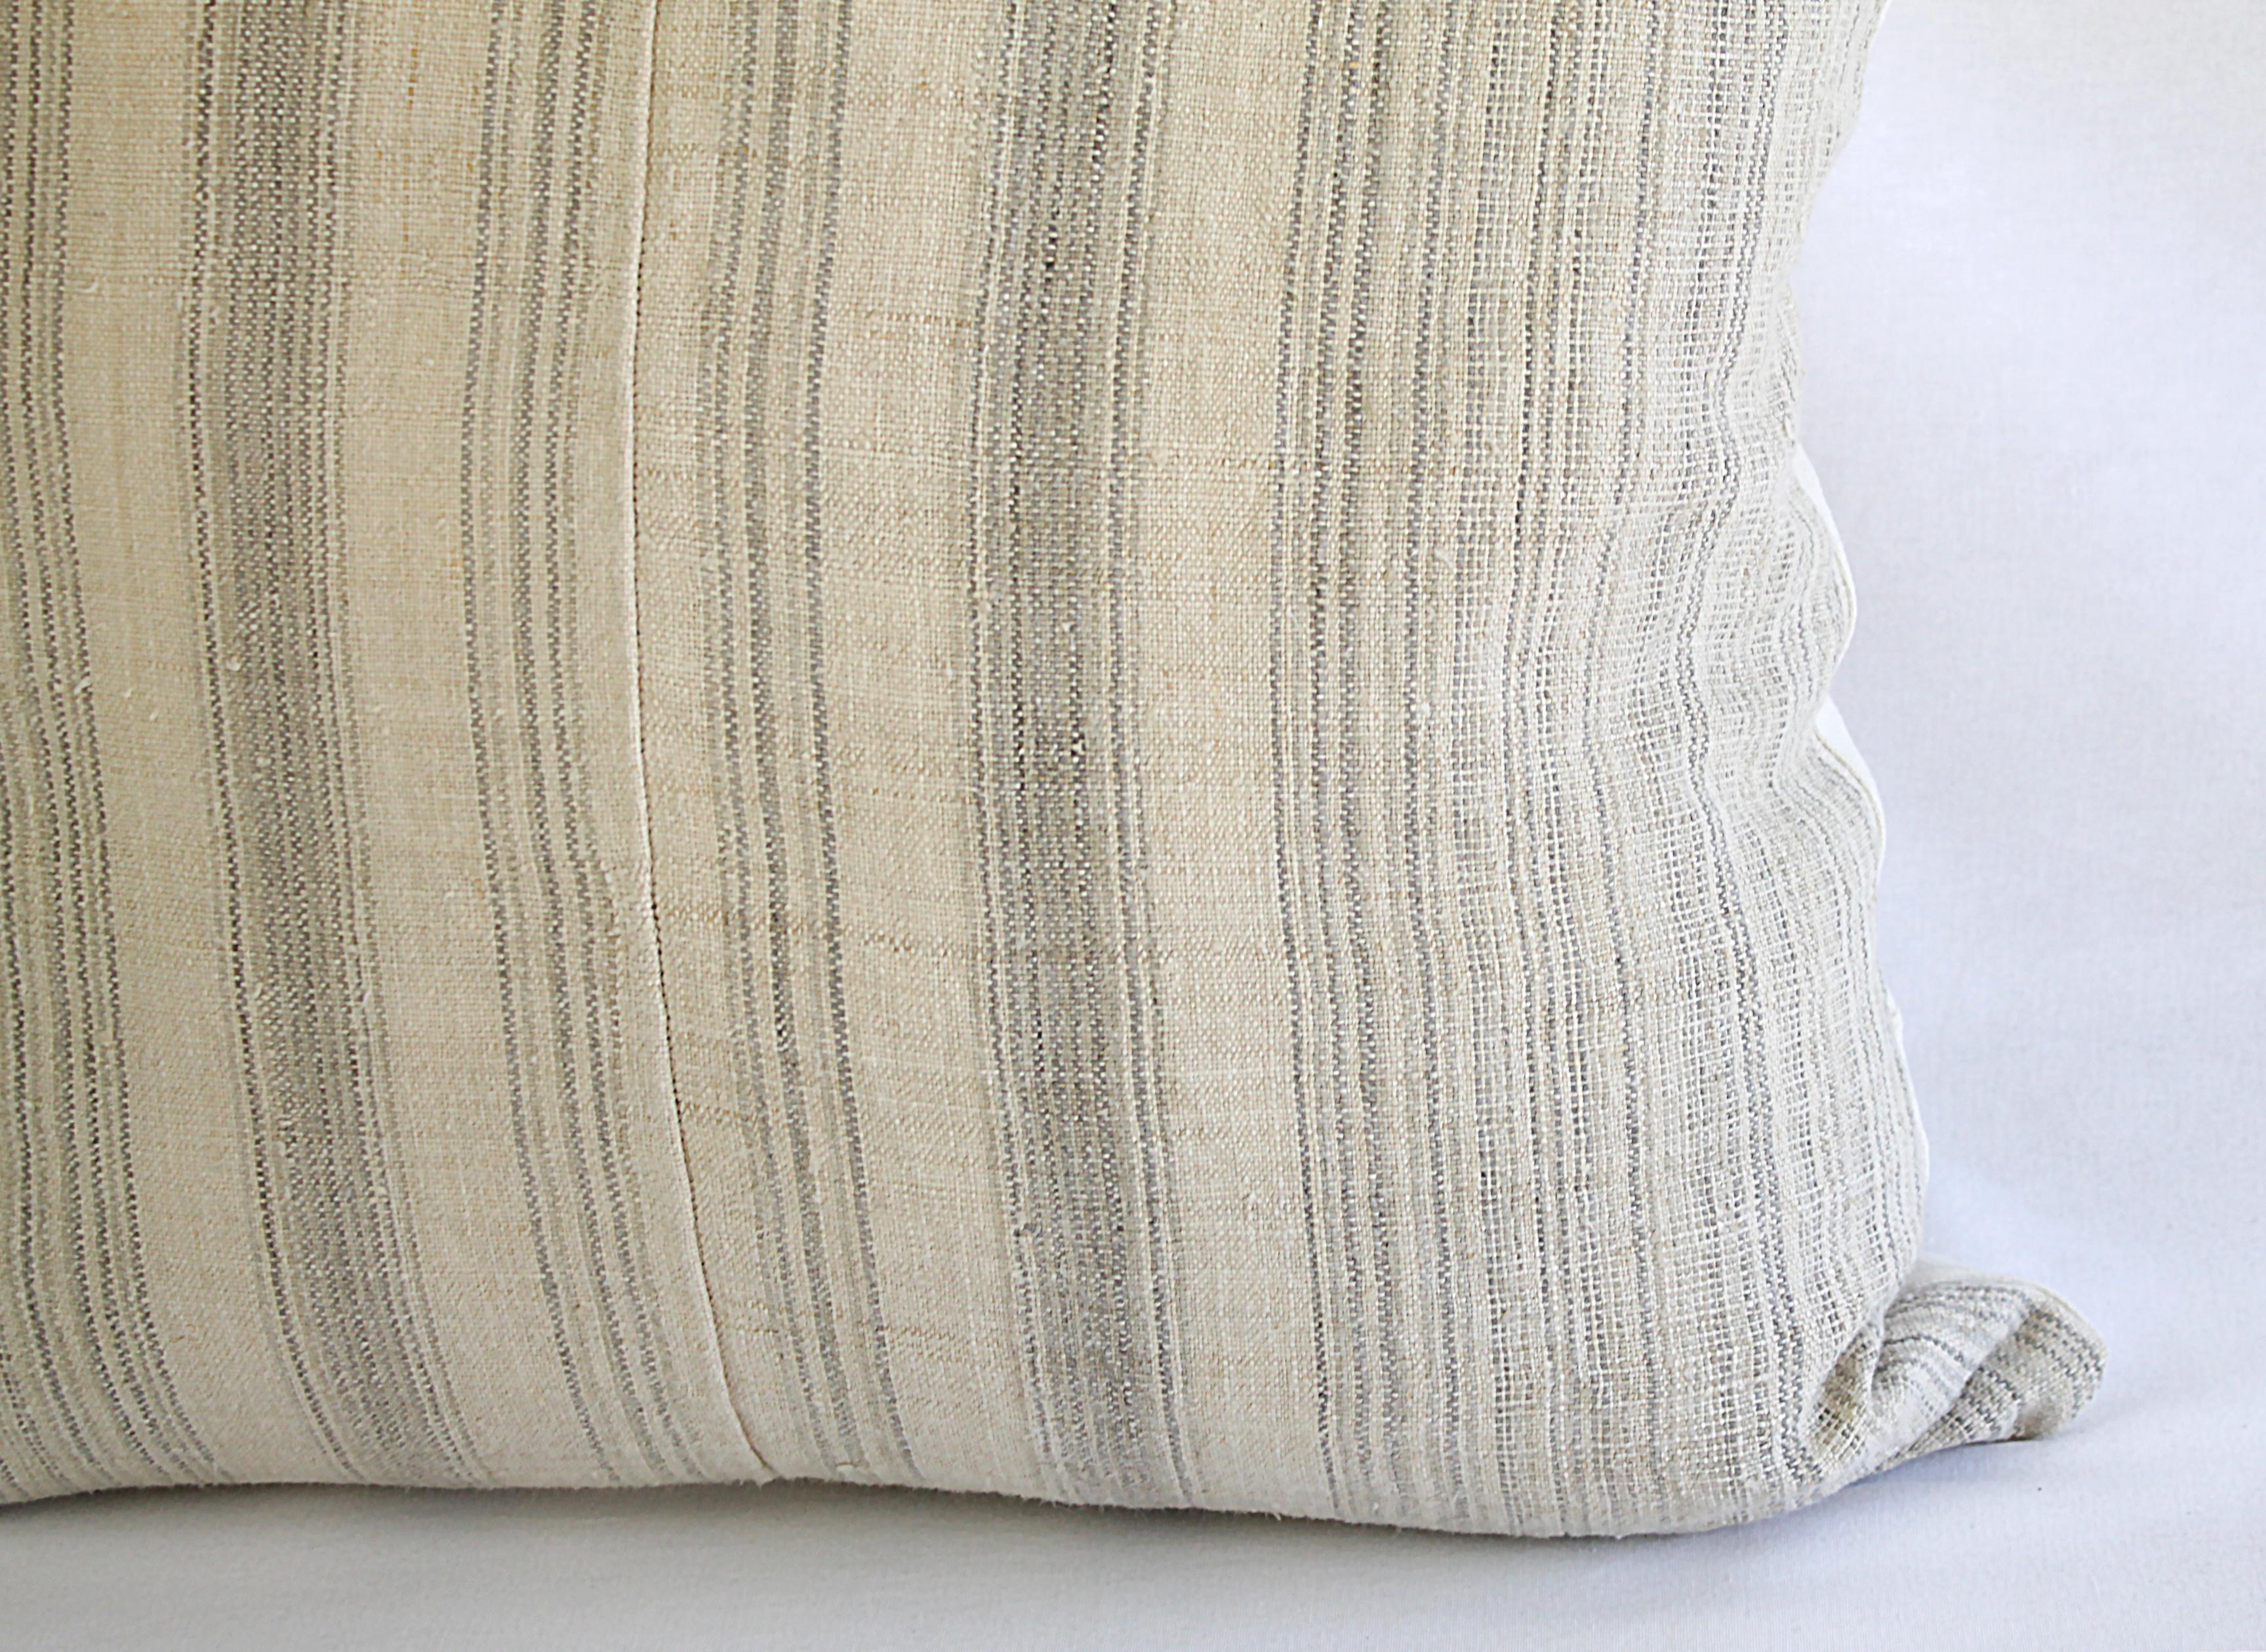 19th Century Antique Homespun Linen and Striped Grain Sack Pillow